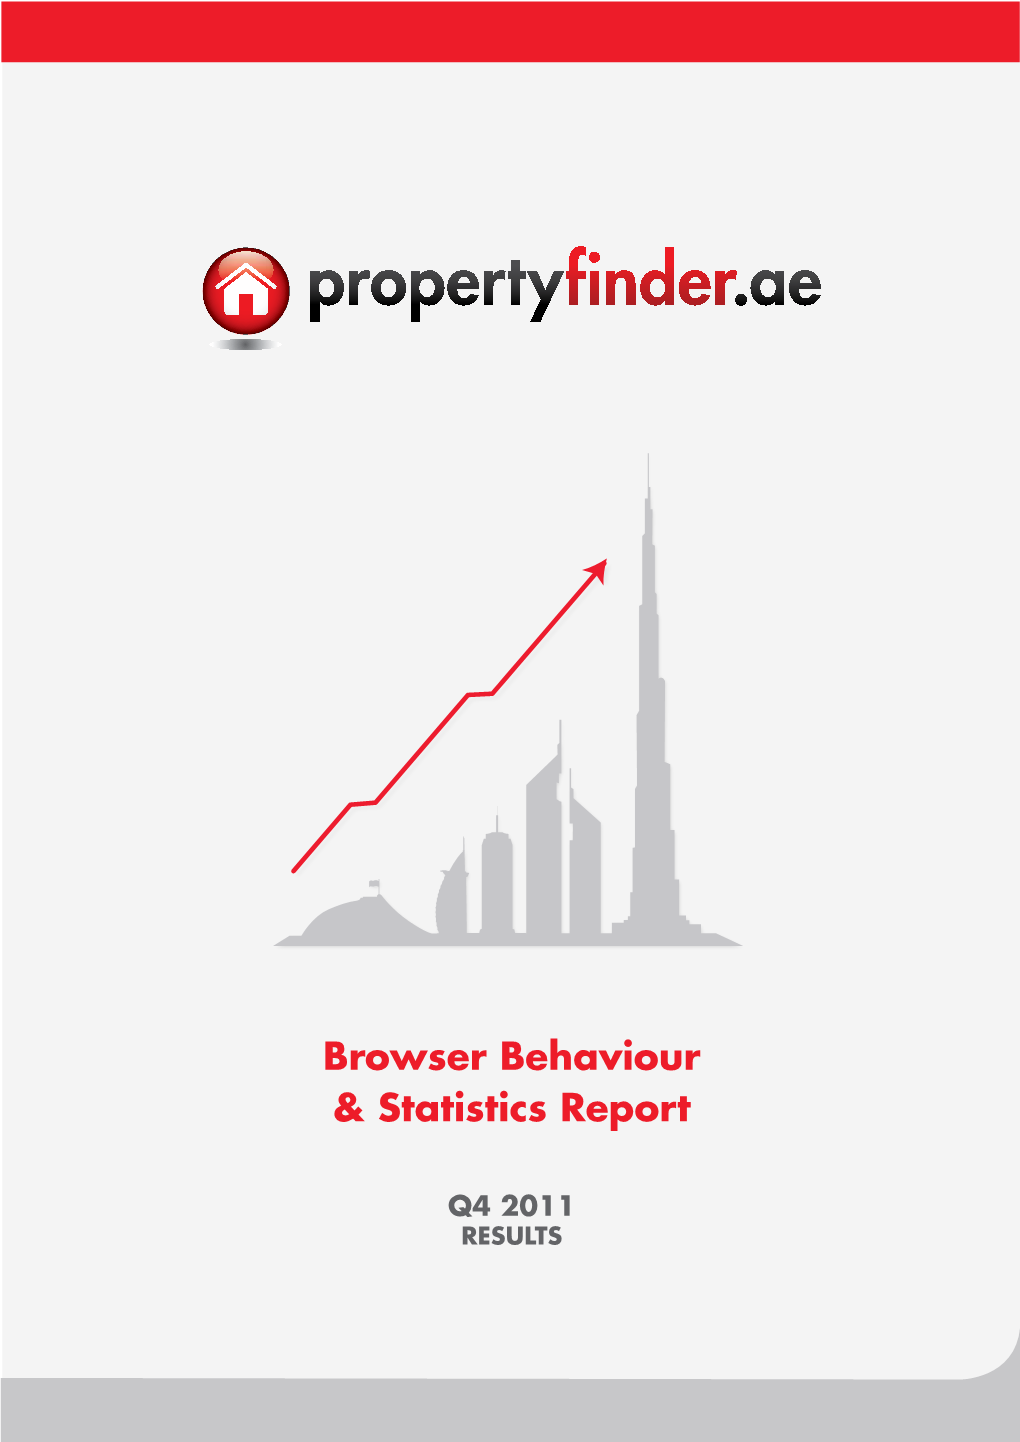 Browser Behaviour & Statistics Report